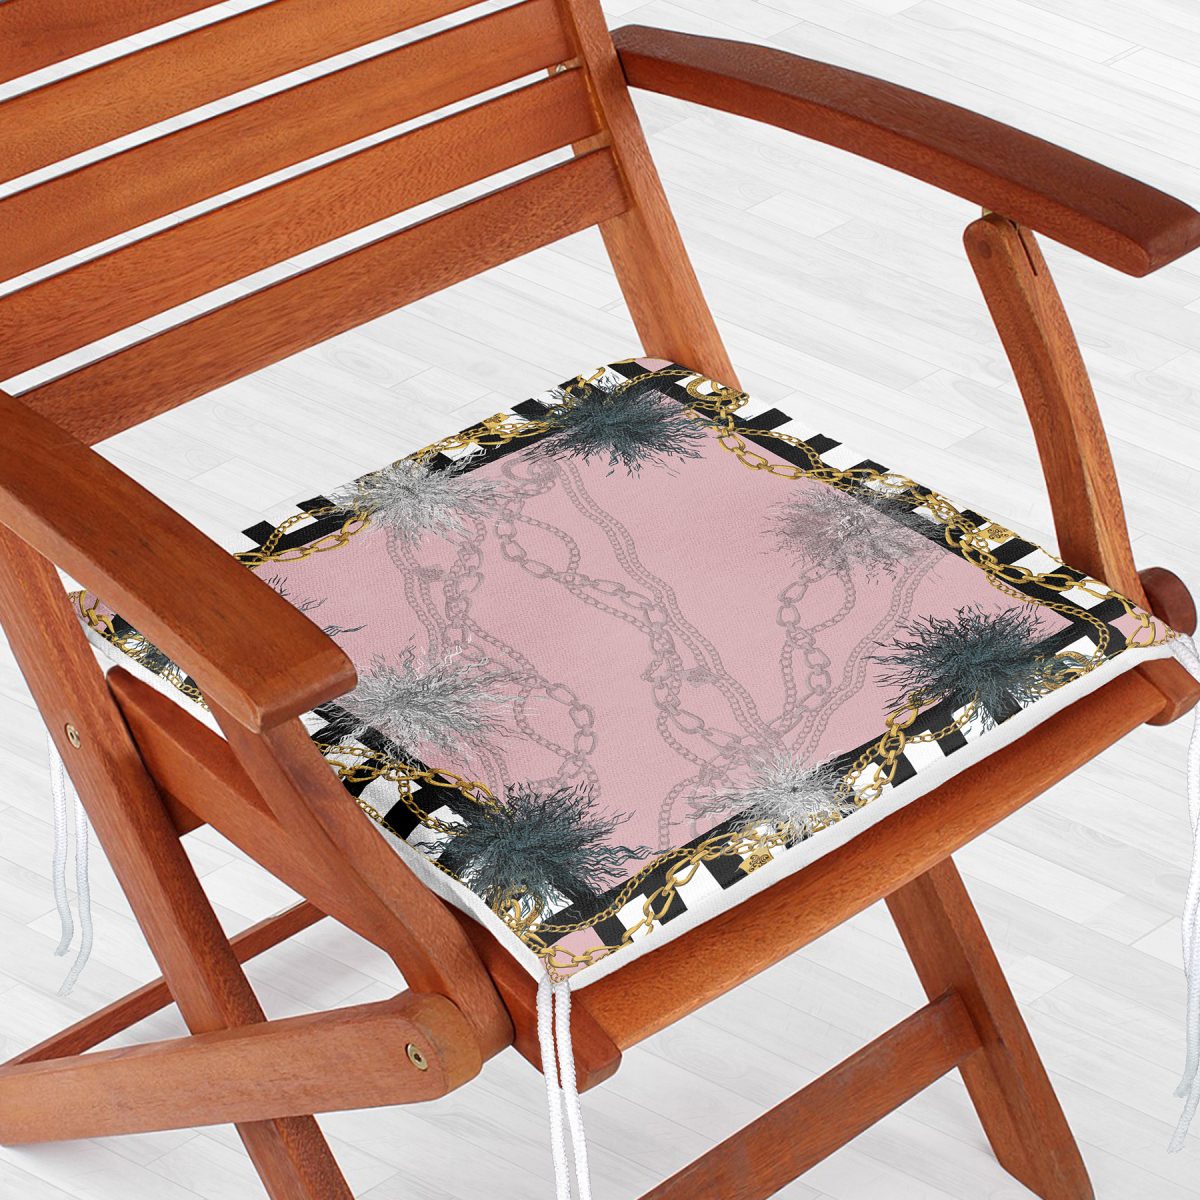 RealHomes Özel Tasarım Dijital Baskılı Modern Fermuarlı Sandalye Minderi Realhomes